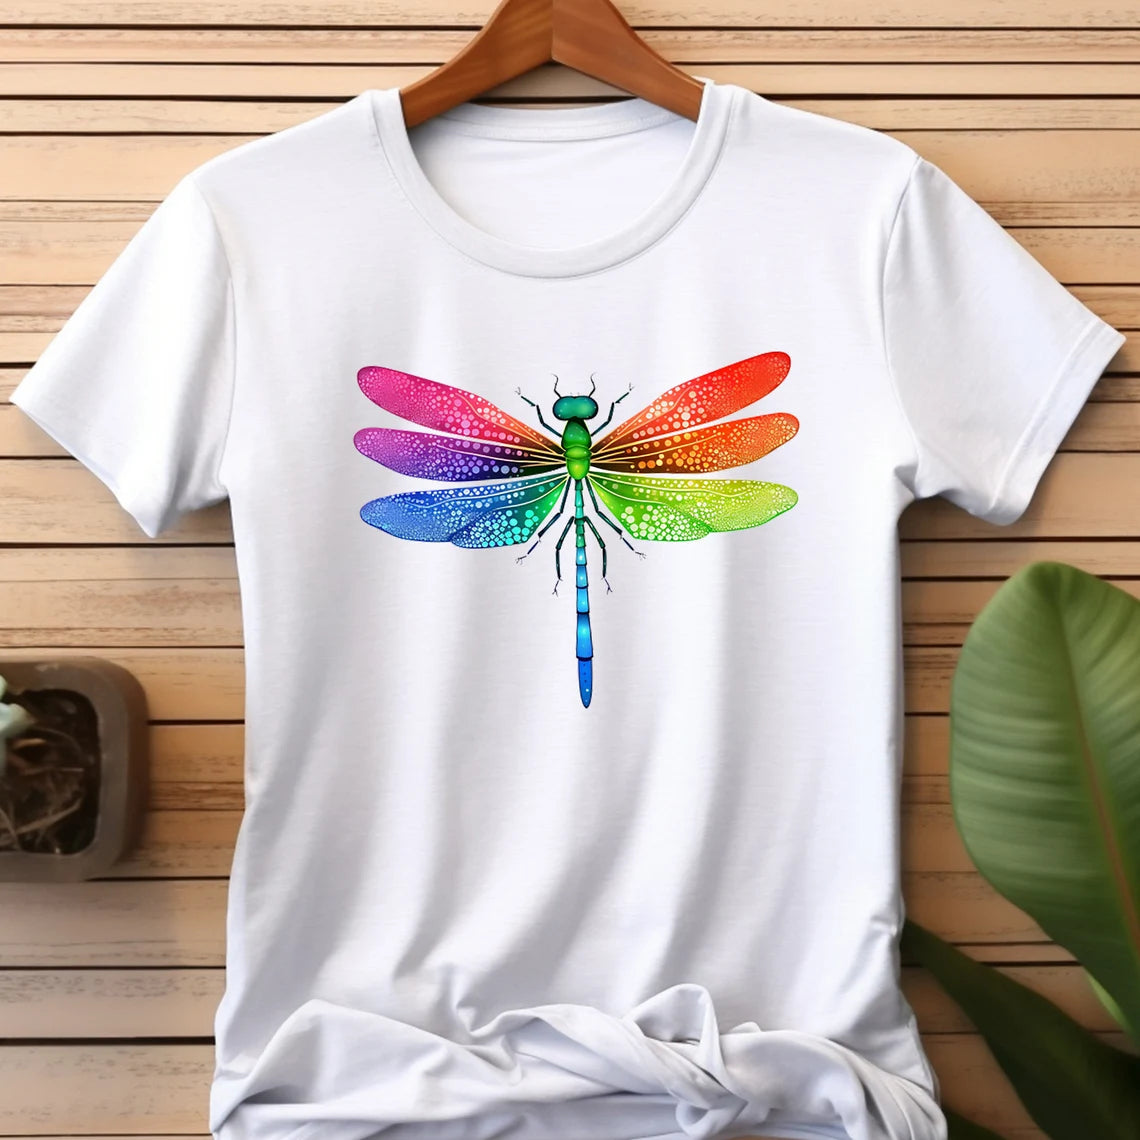 Dragonfly Rainbow Shirt, Positive Shirt, Lucky Shirt, Dragonfly lover gift, LGBT Shirt, Pride Shirt, Trans Pride,Gay Pride Awareness